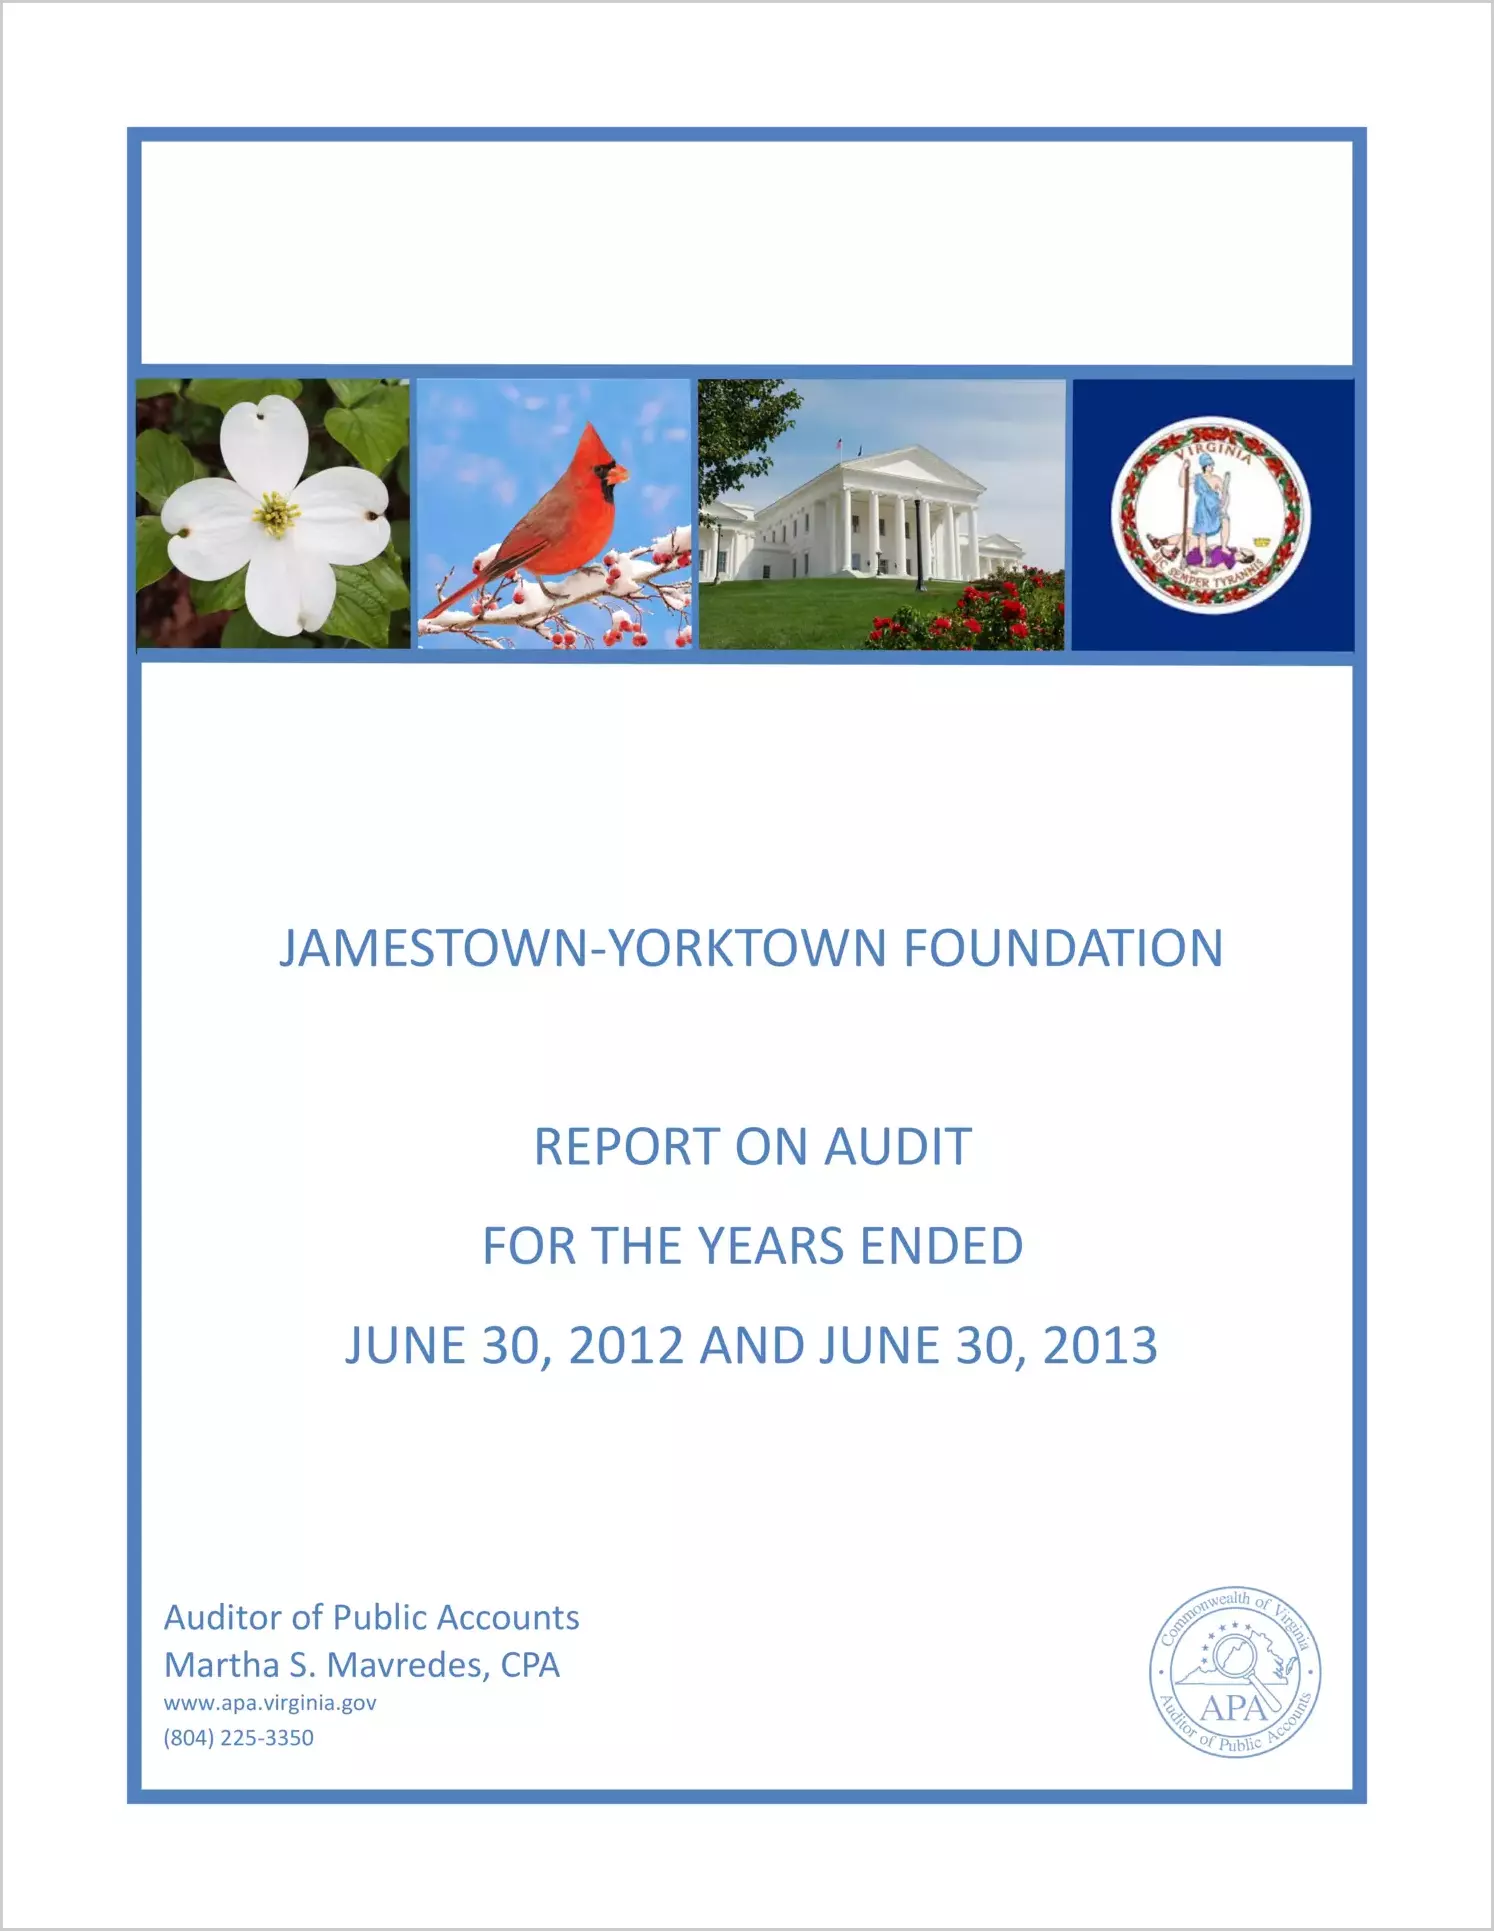 Jamestown-Yorktown Foundation for years ending June 30, 2012 and June 30, 2013